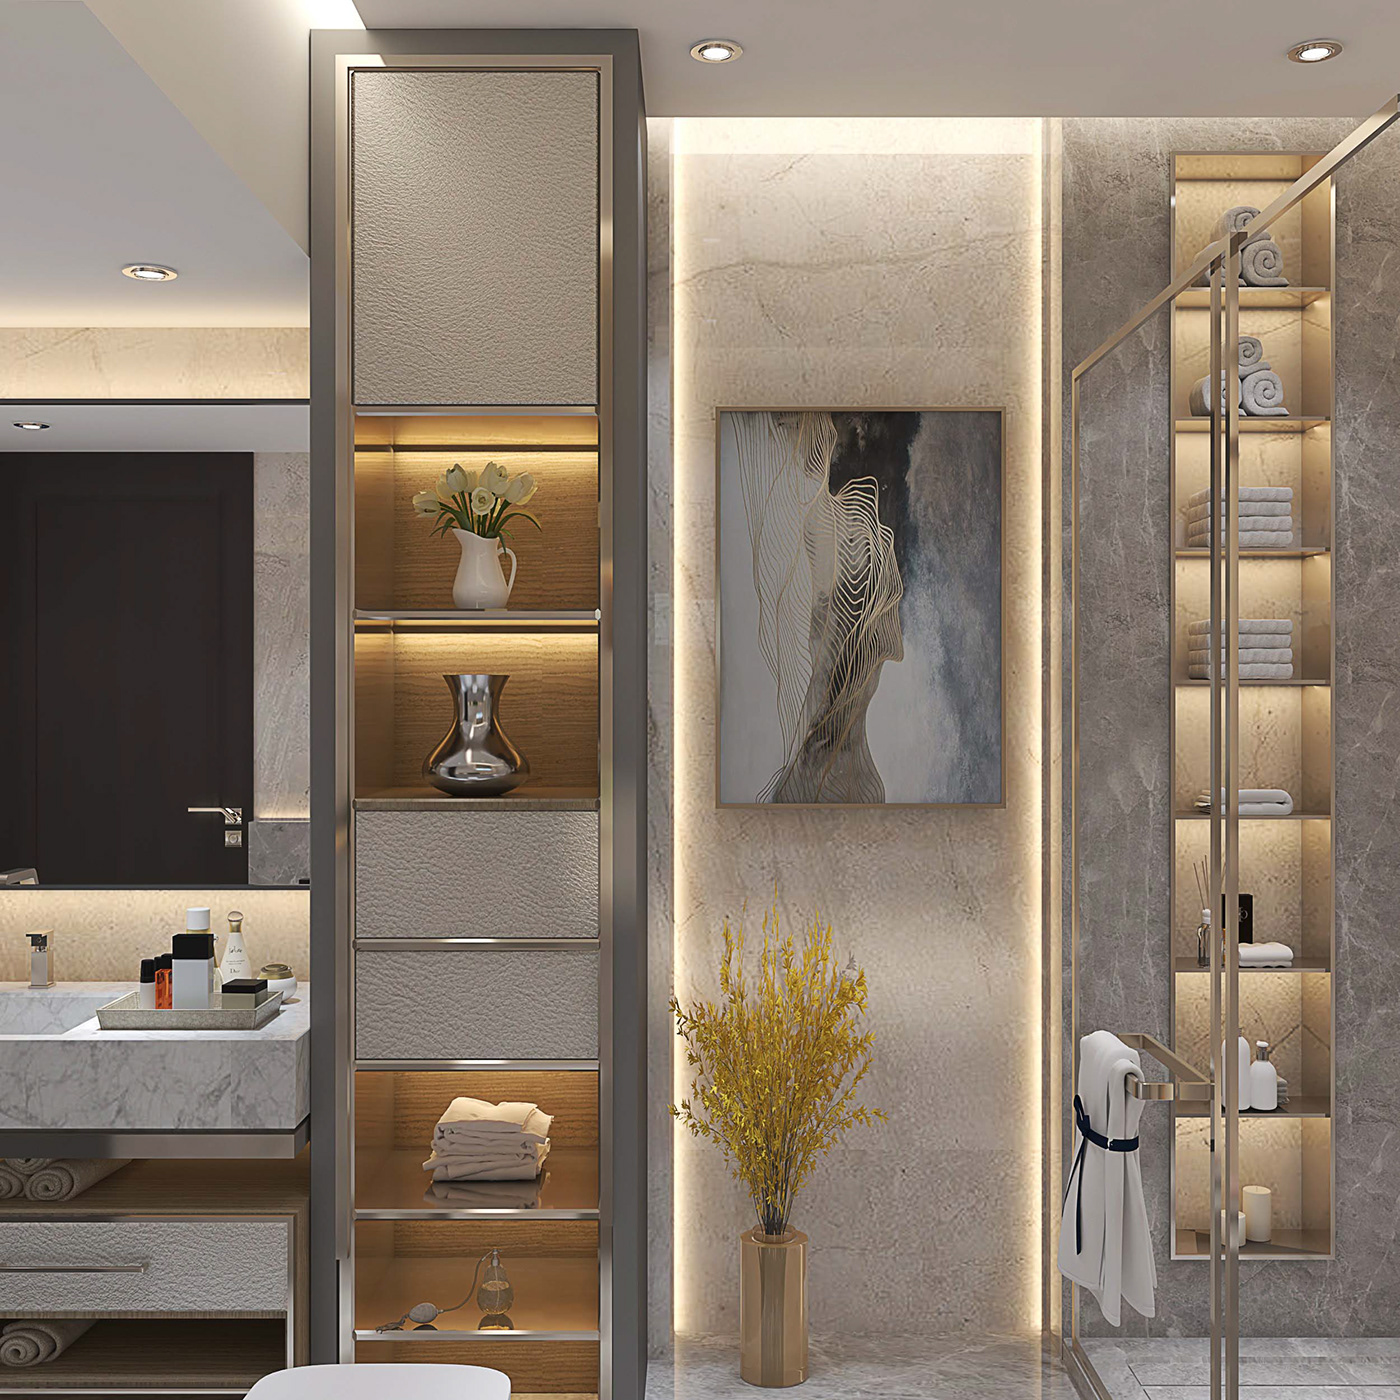 #bathroom design #interior design #render